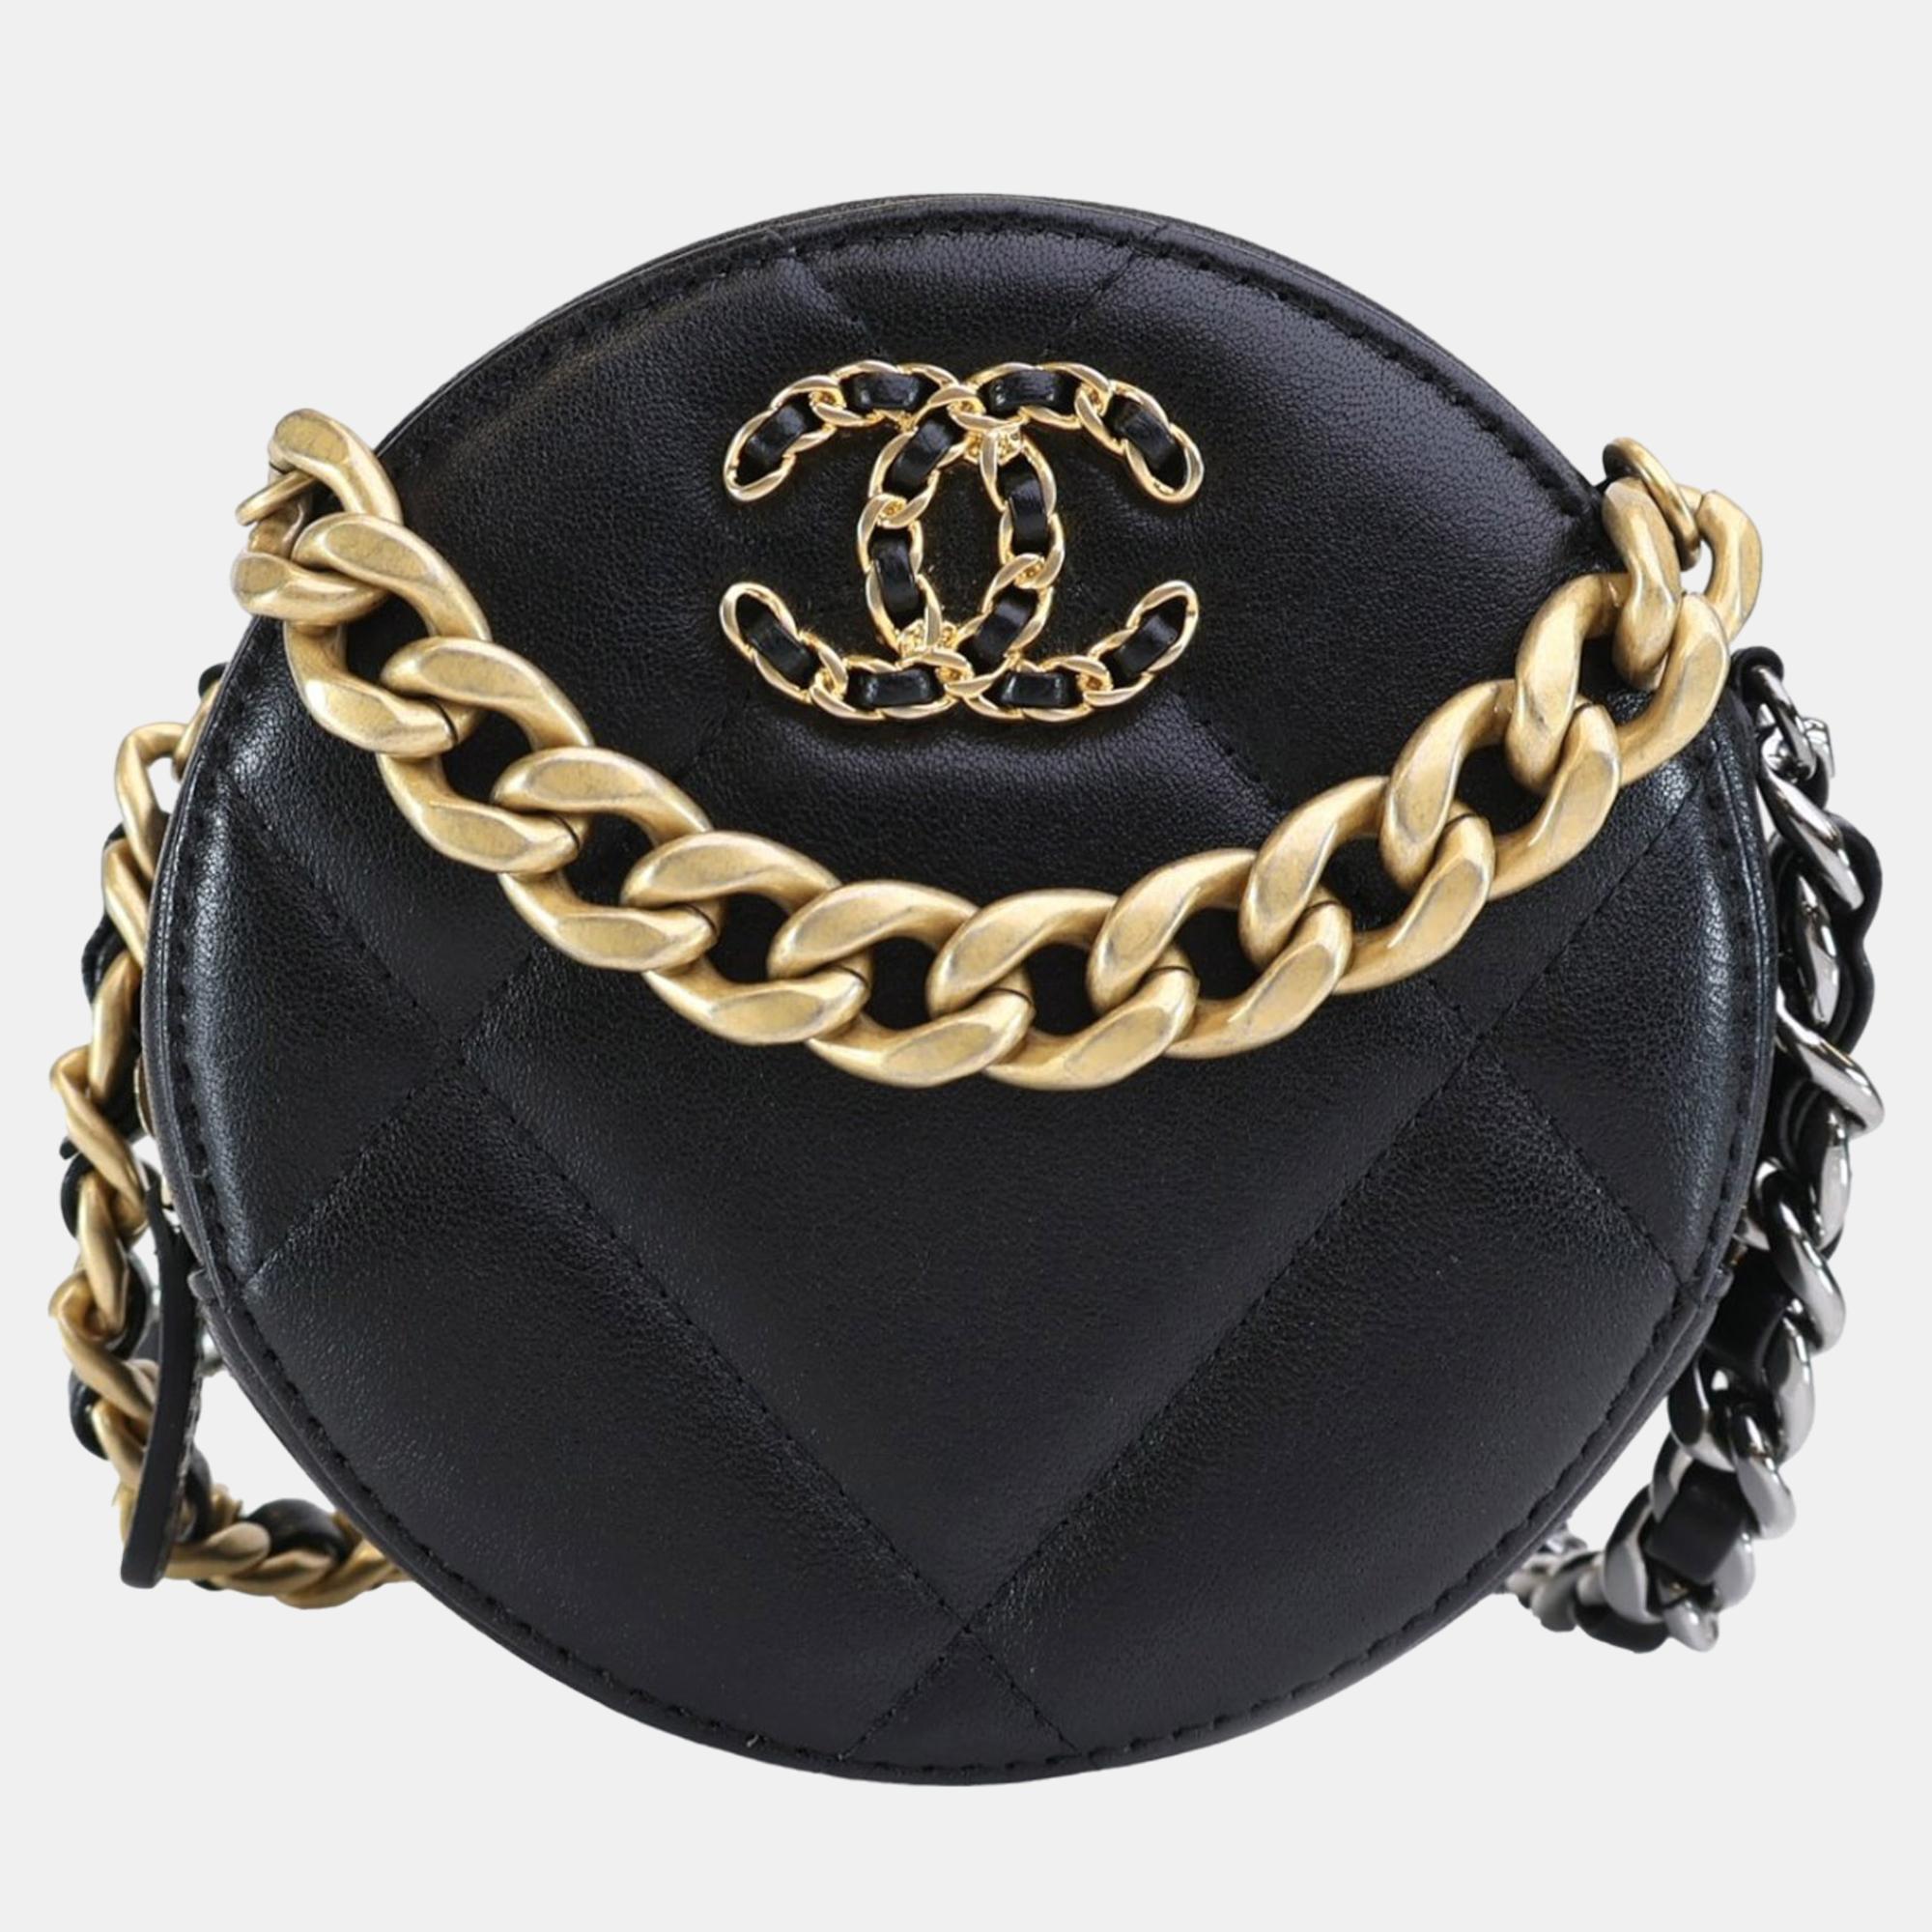 Chanel black lambskin 19 round clutch with chain